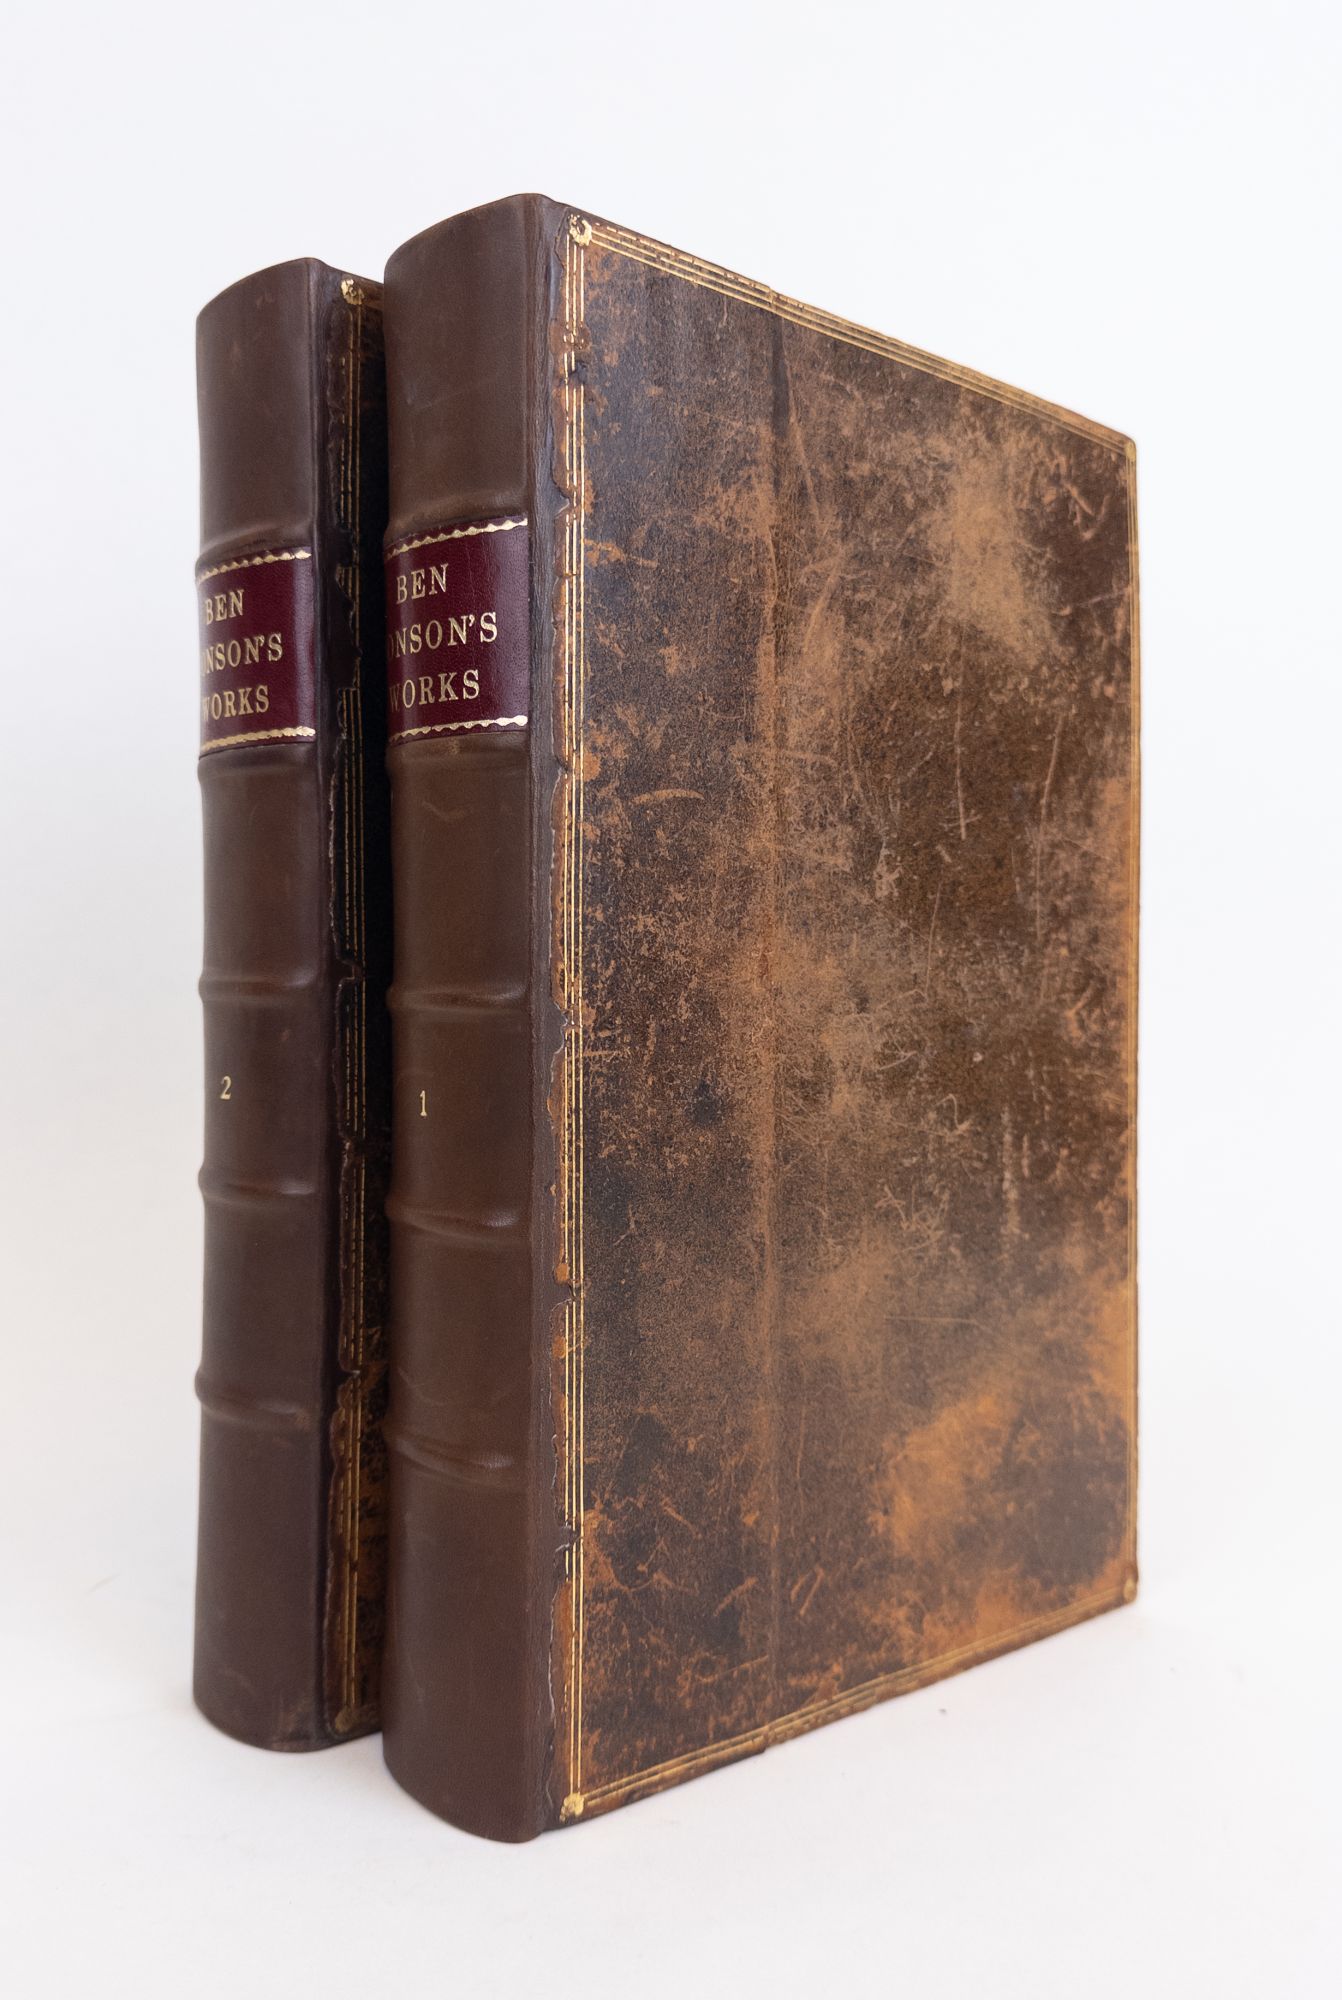 1315045 THE WORKES OF BENJAMIN JONSON [Two volumes]. Ben Jonson.